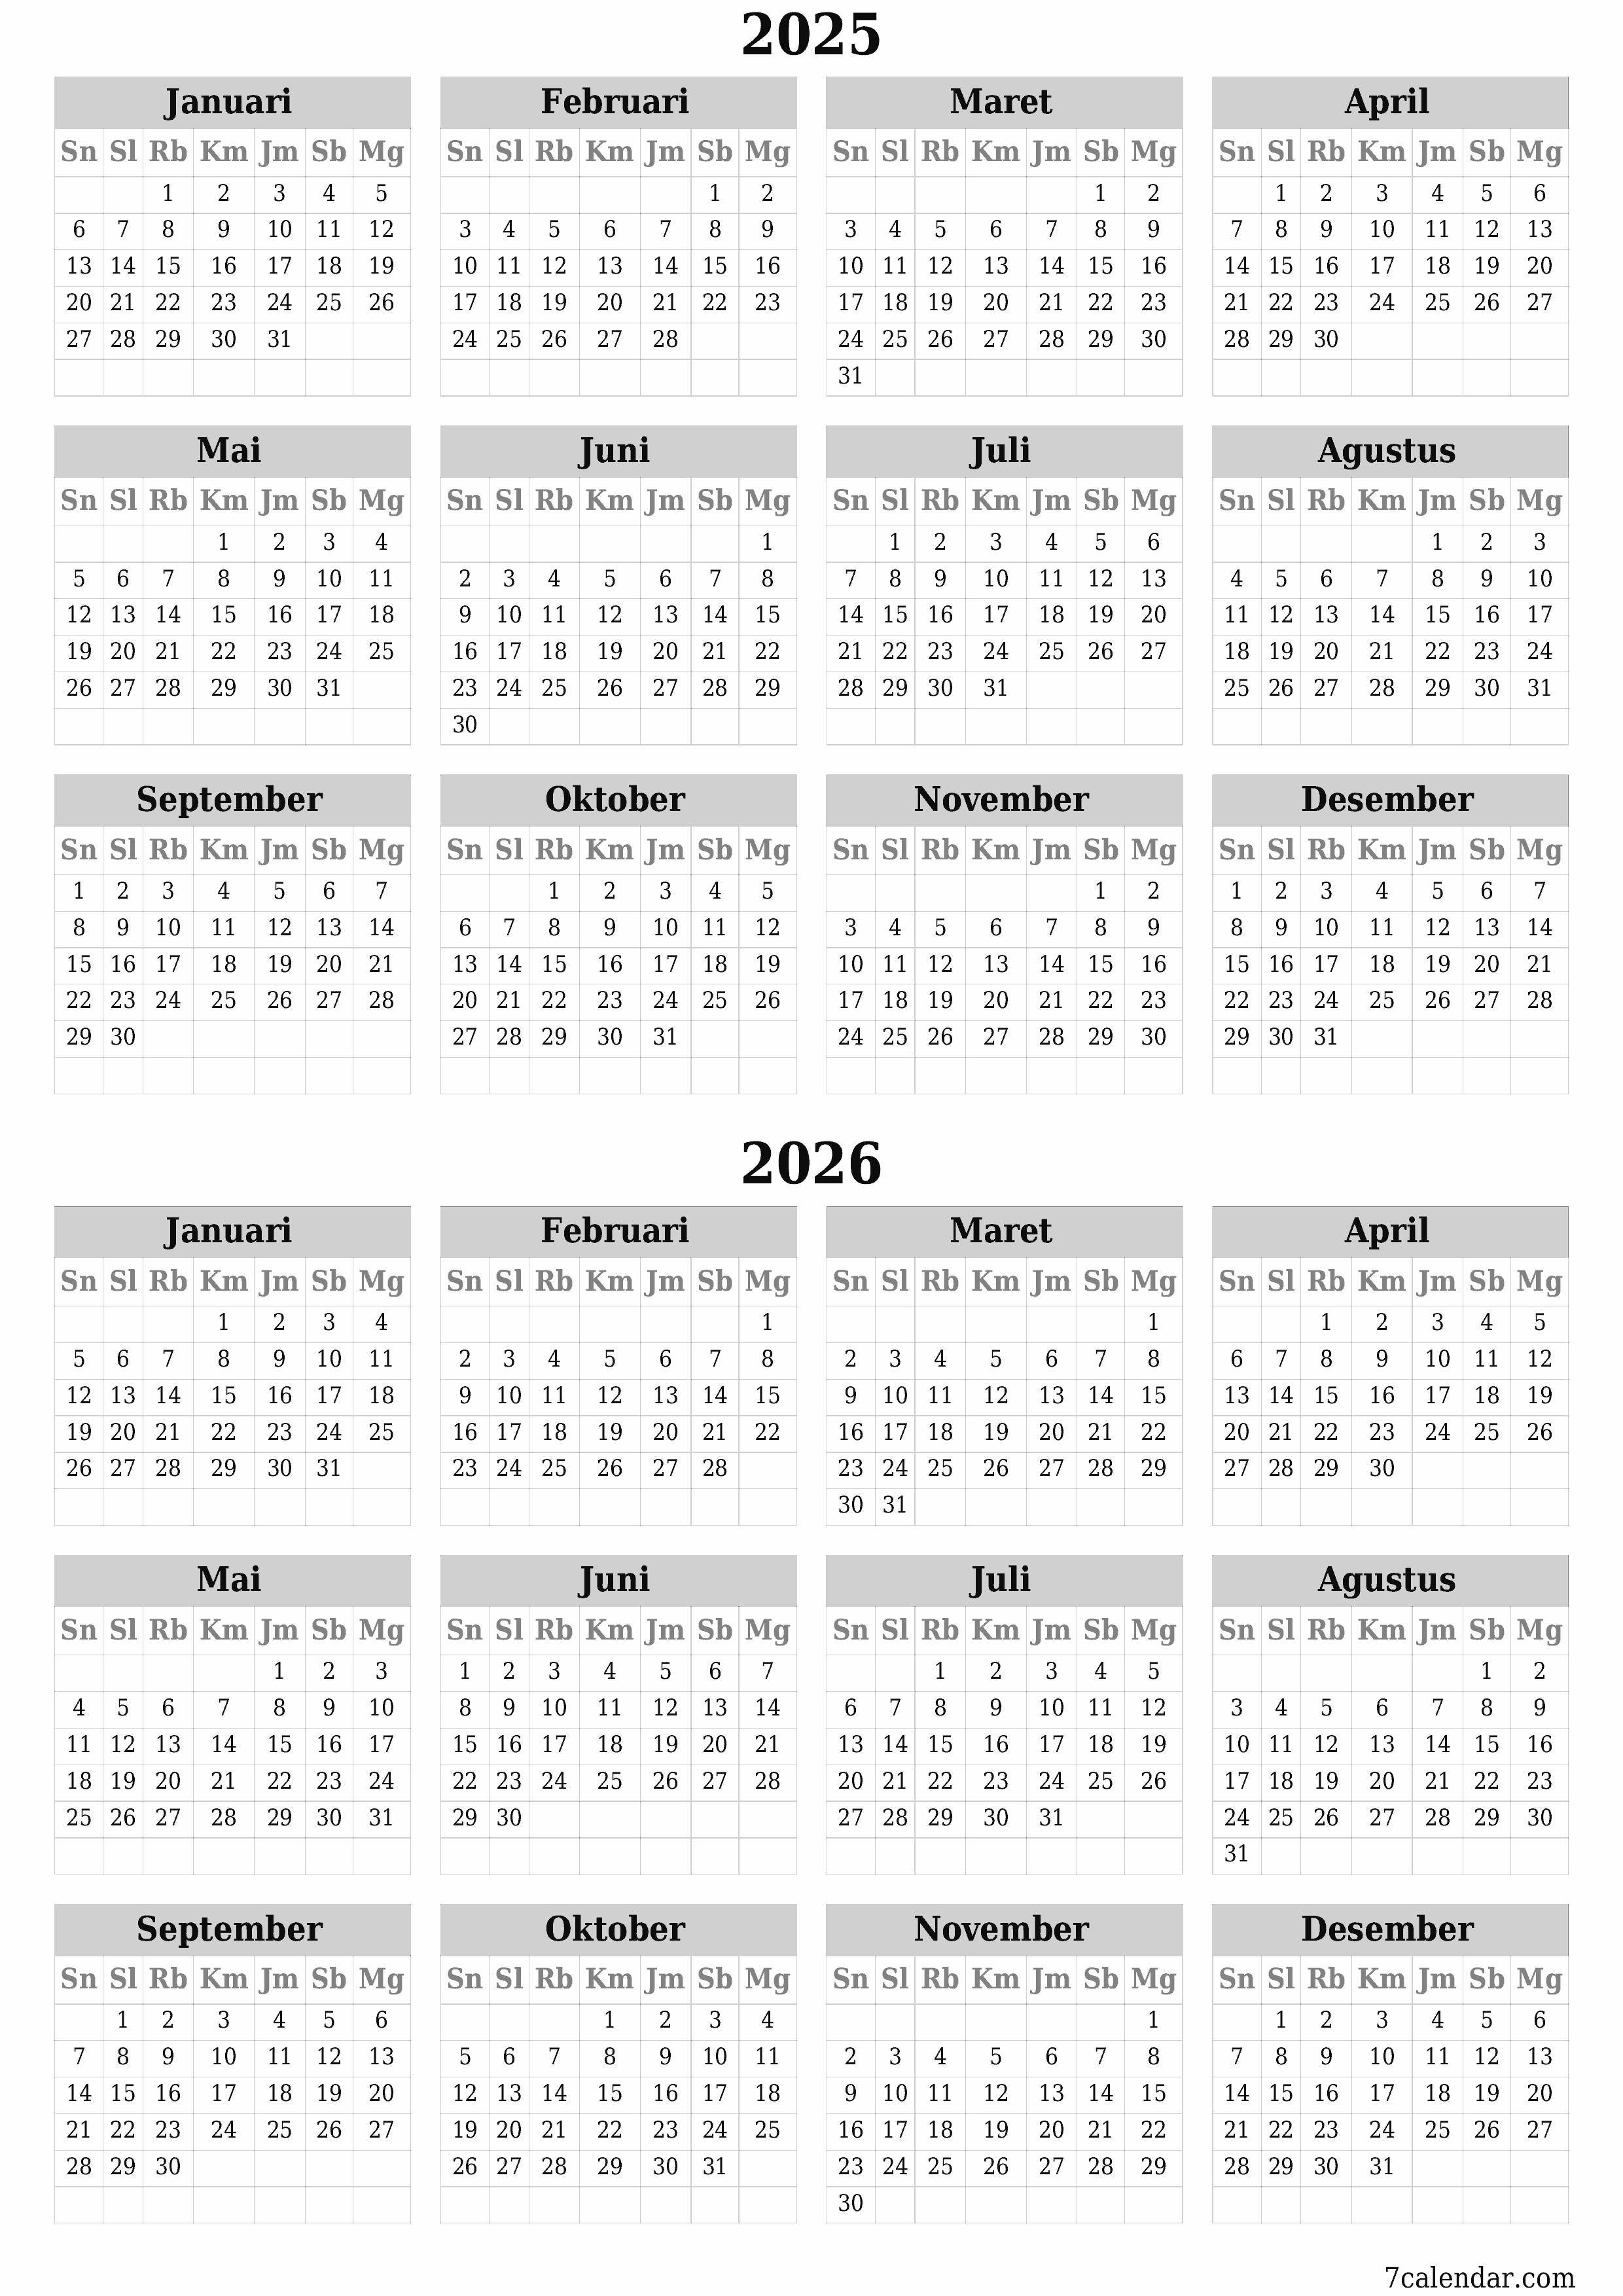  yang dapat dicetak dinding templat gratisvertikal Tahunan kalender Februari (Feb) 2025